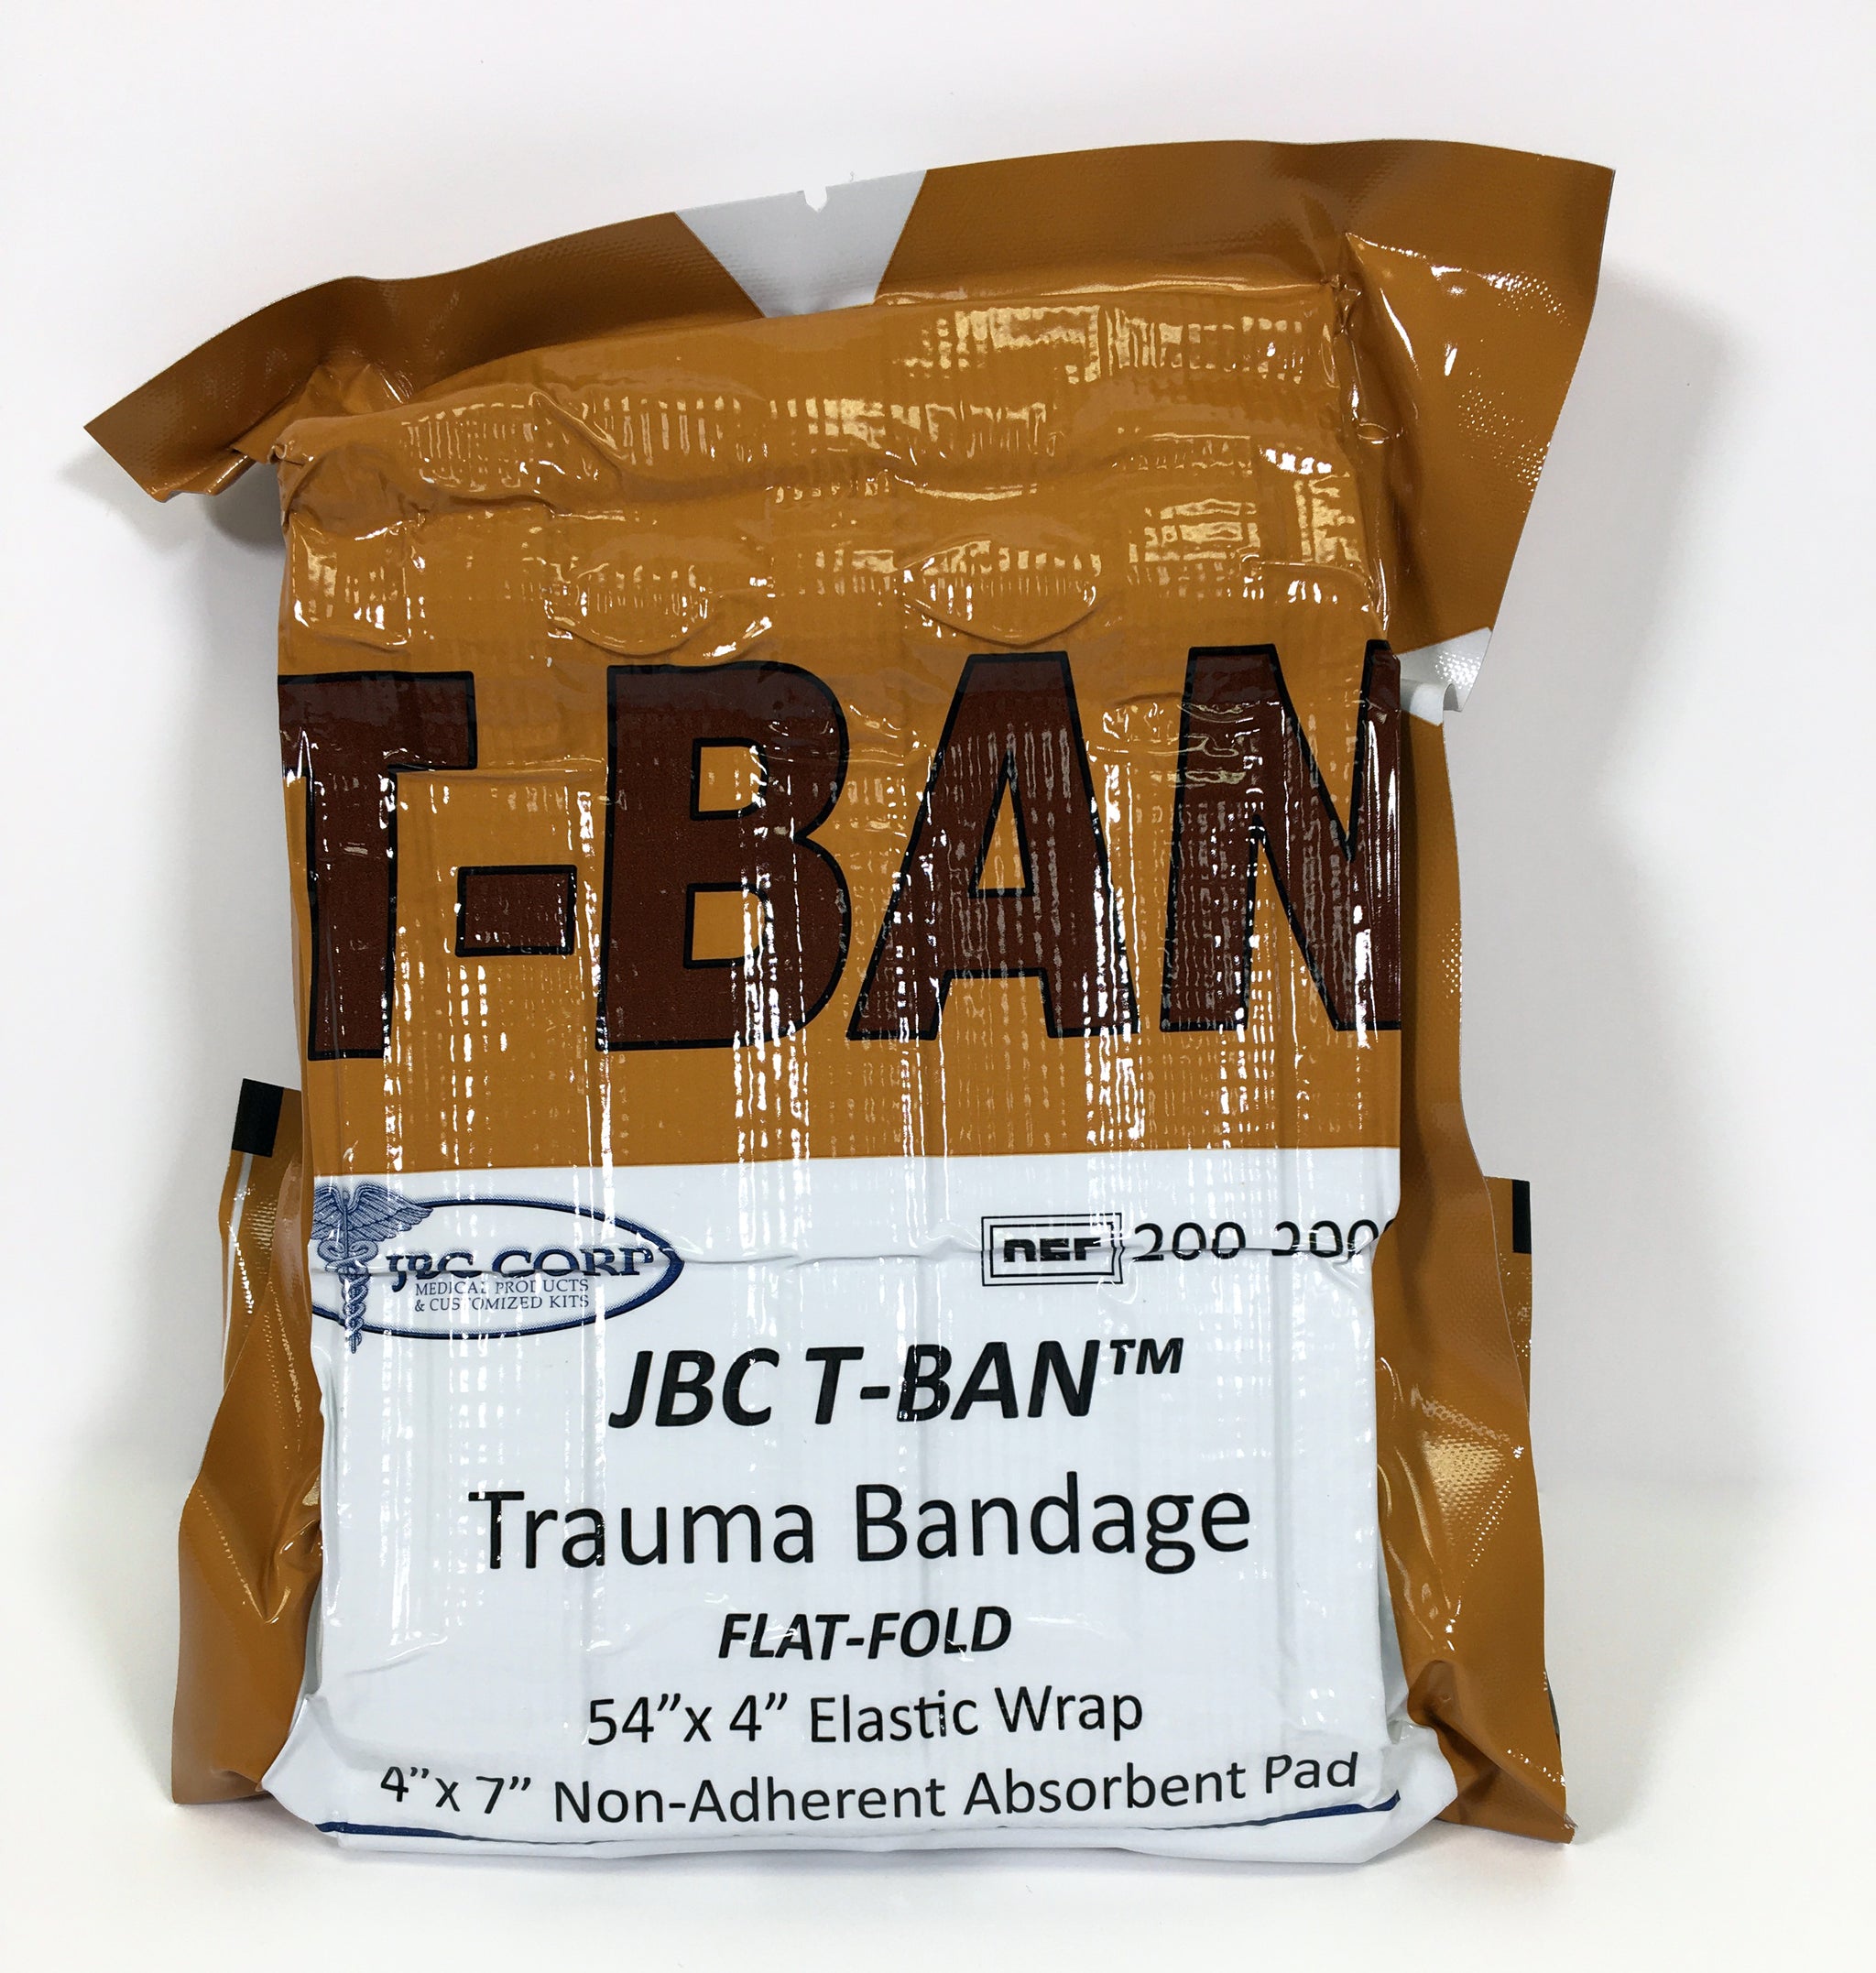 Trauma Bandage 54"x4" Elastic Wrap 4"x7" Non-Adherent Absorbent Pad